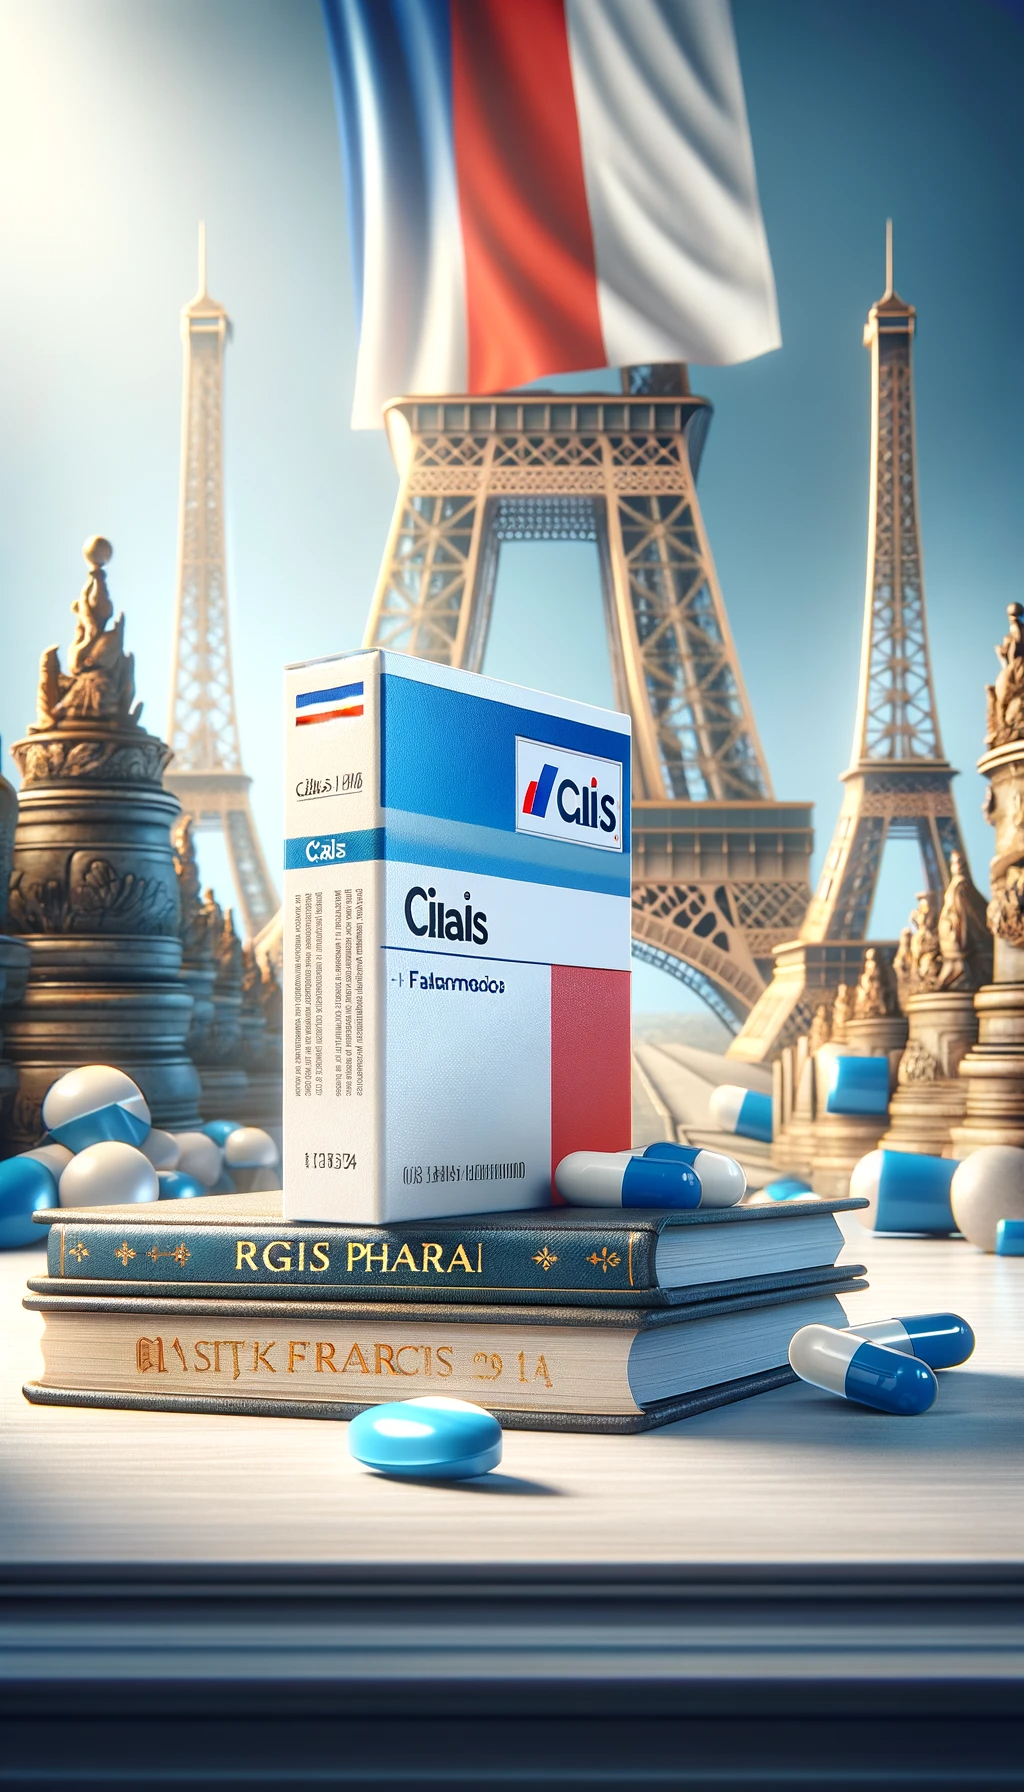 Acheter cialis en pharmacie paris